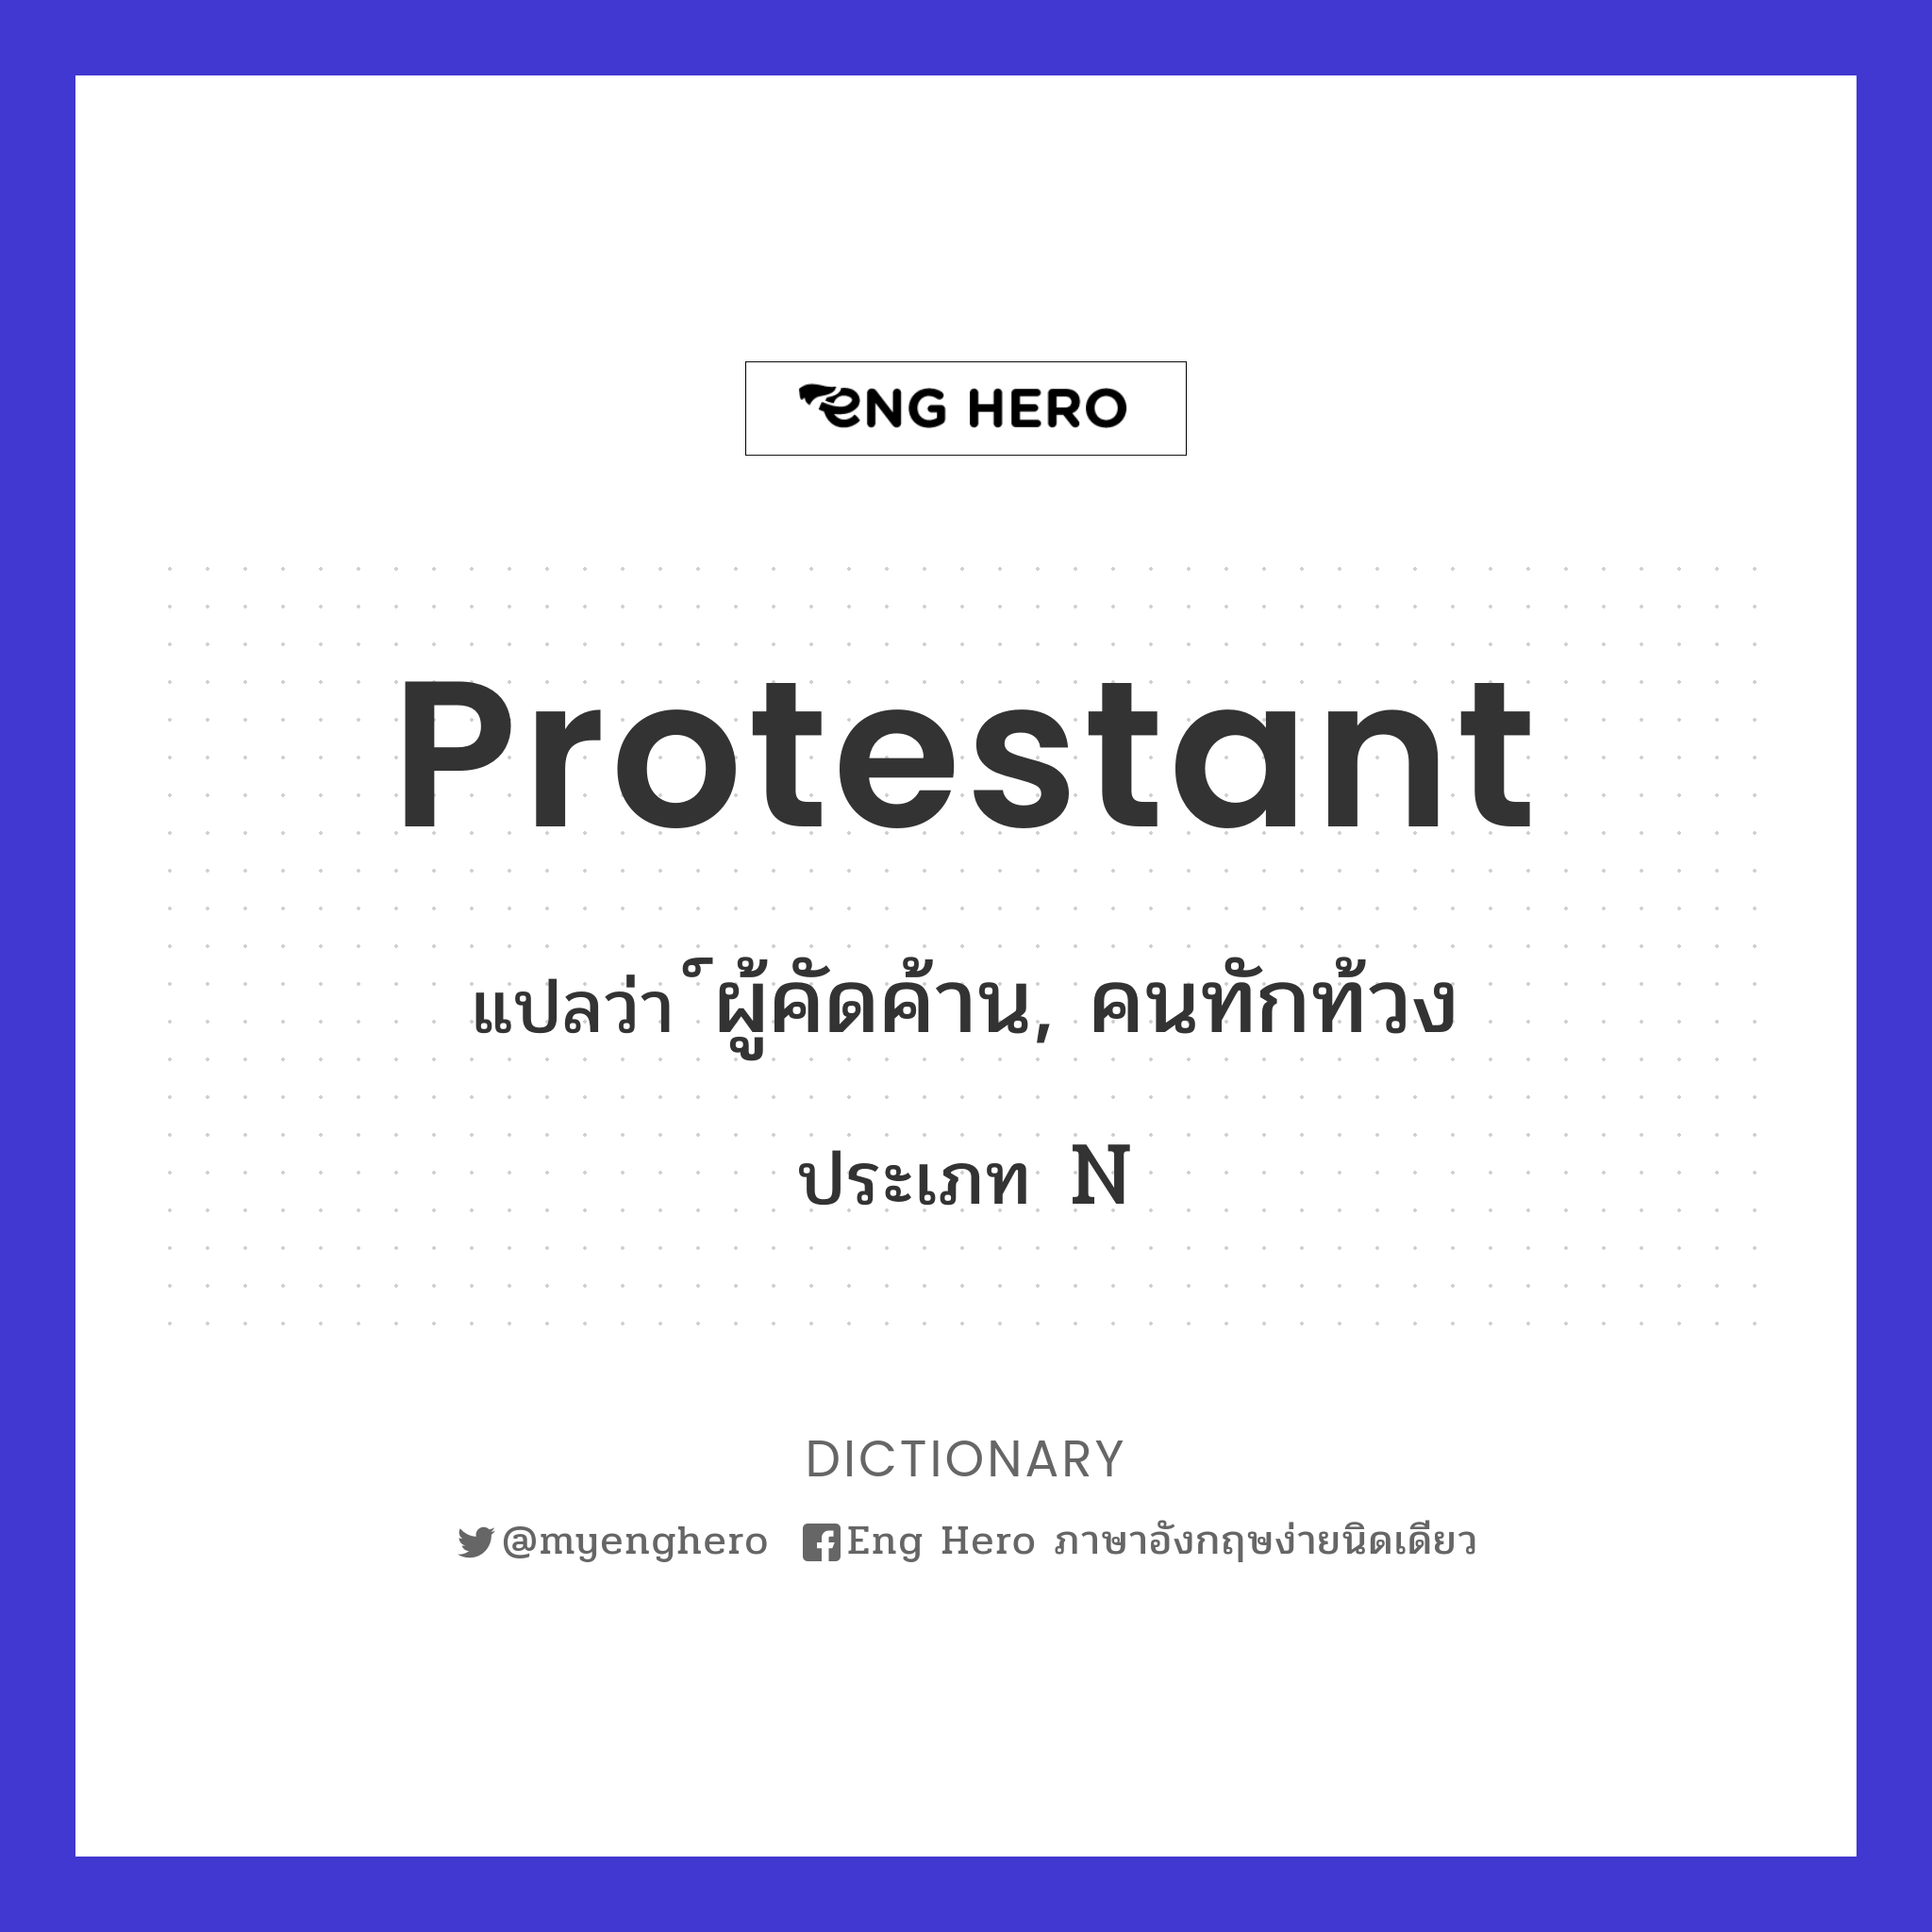 protestant